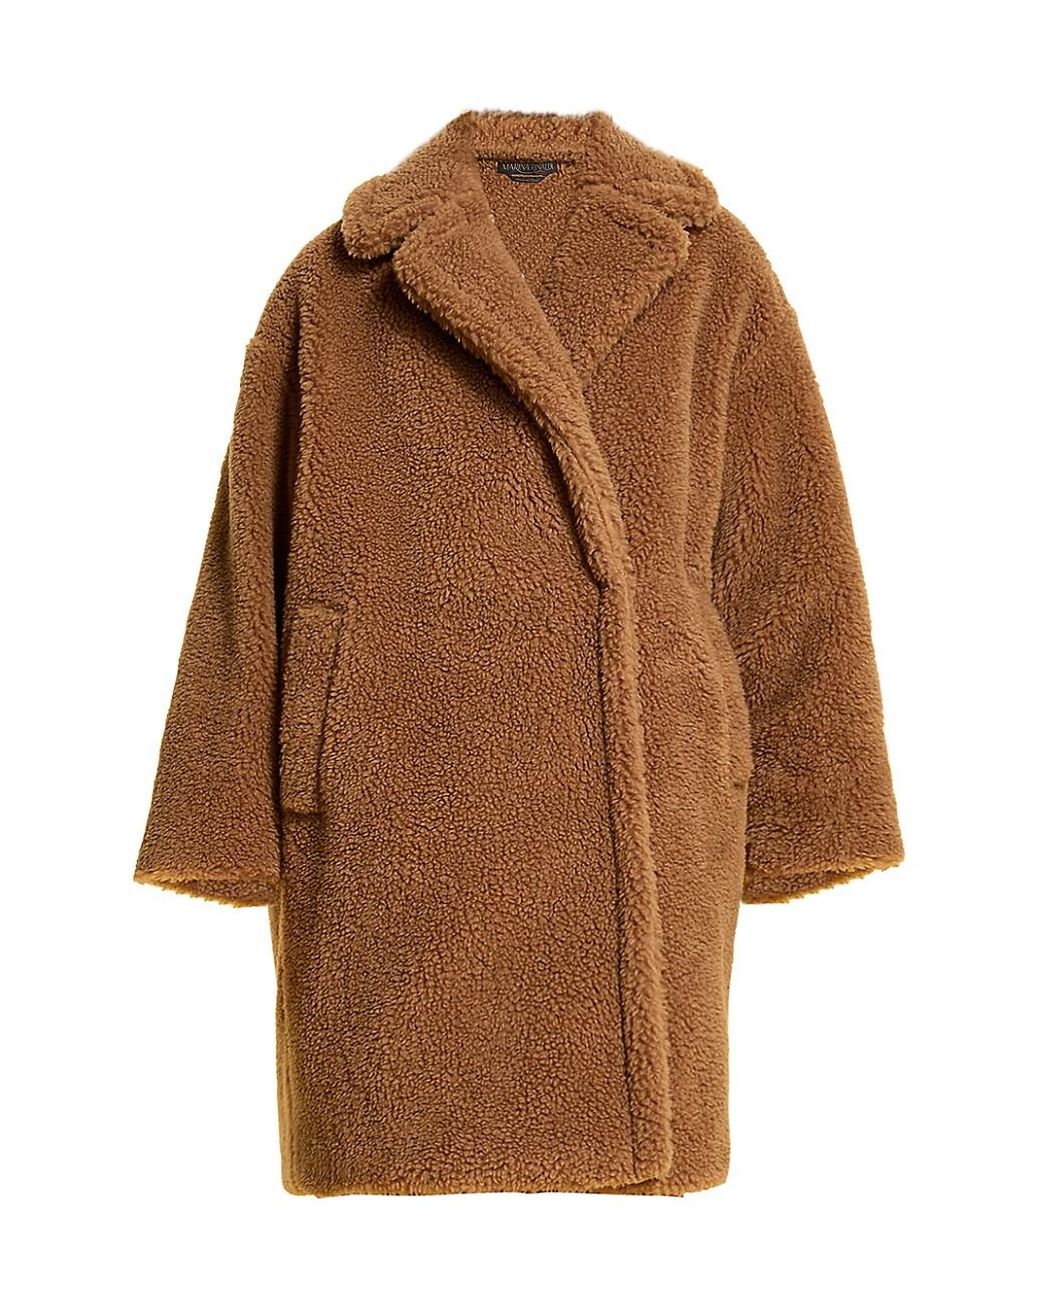 Marina Rinaldi Tabula Camel Wool Teddy Coat - Lyst